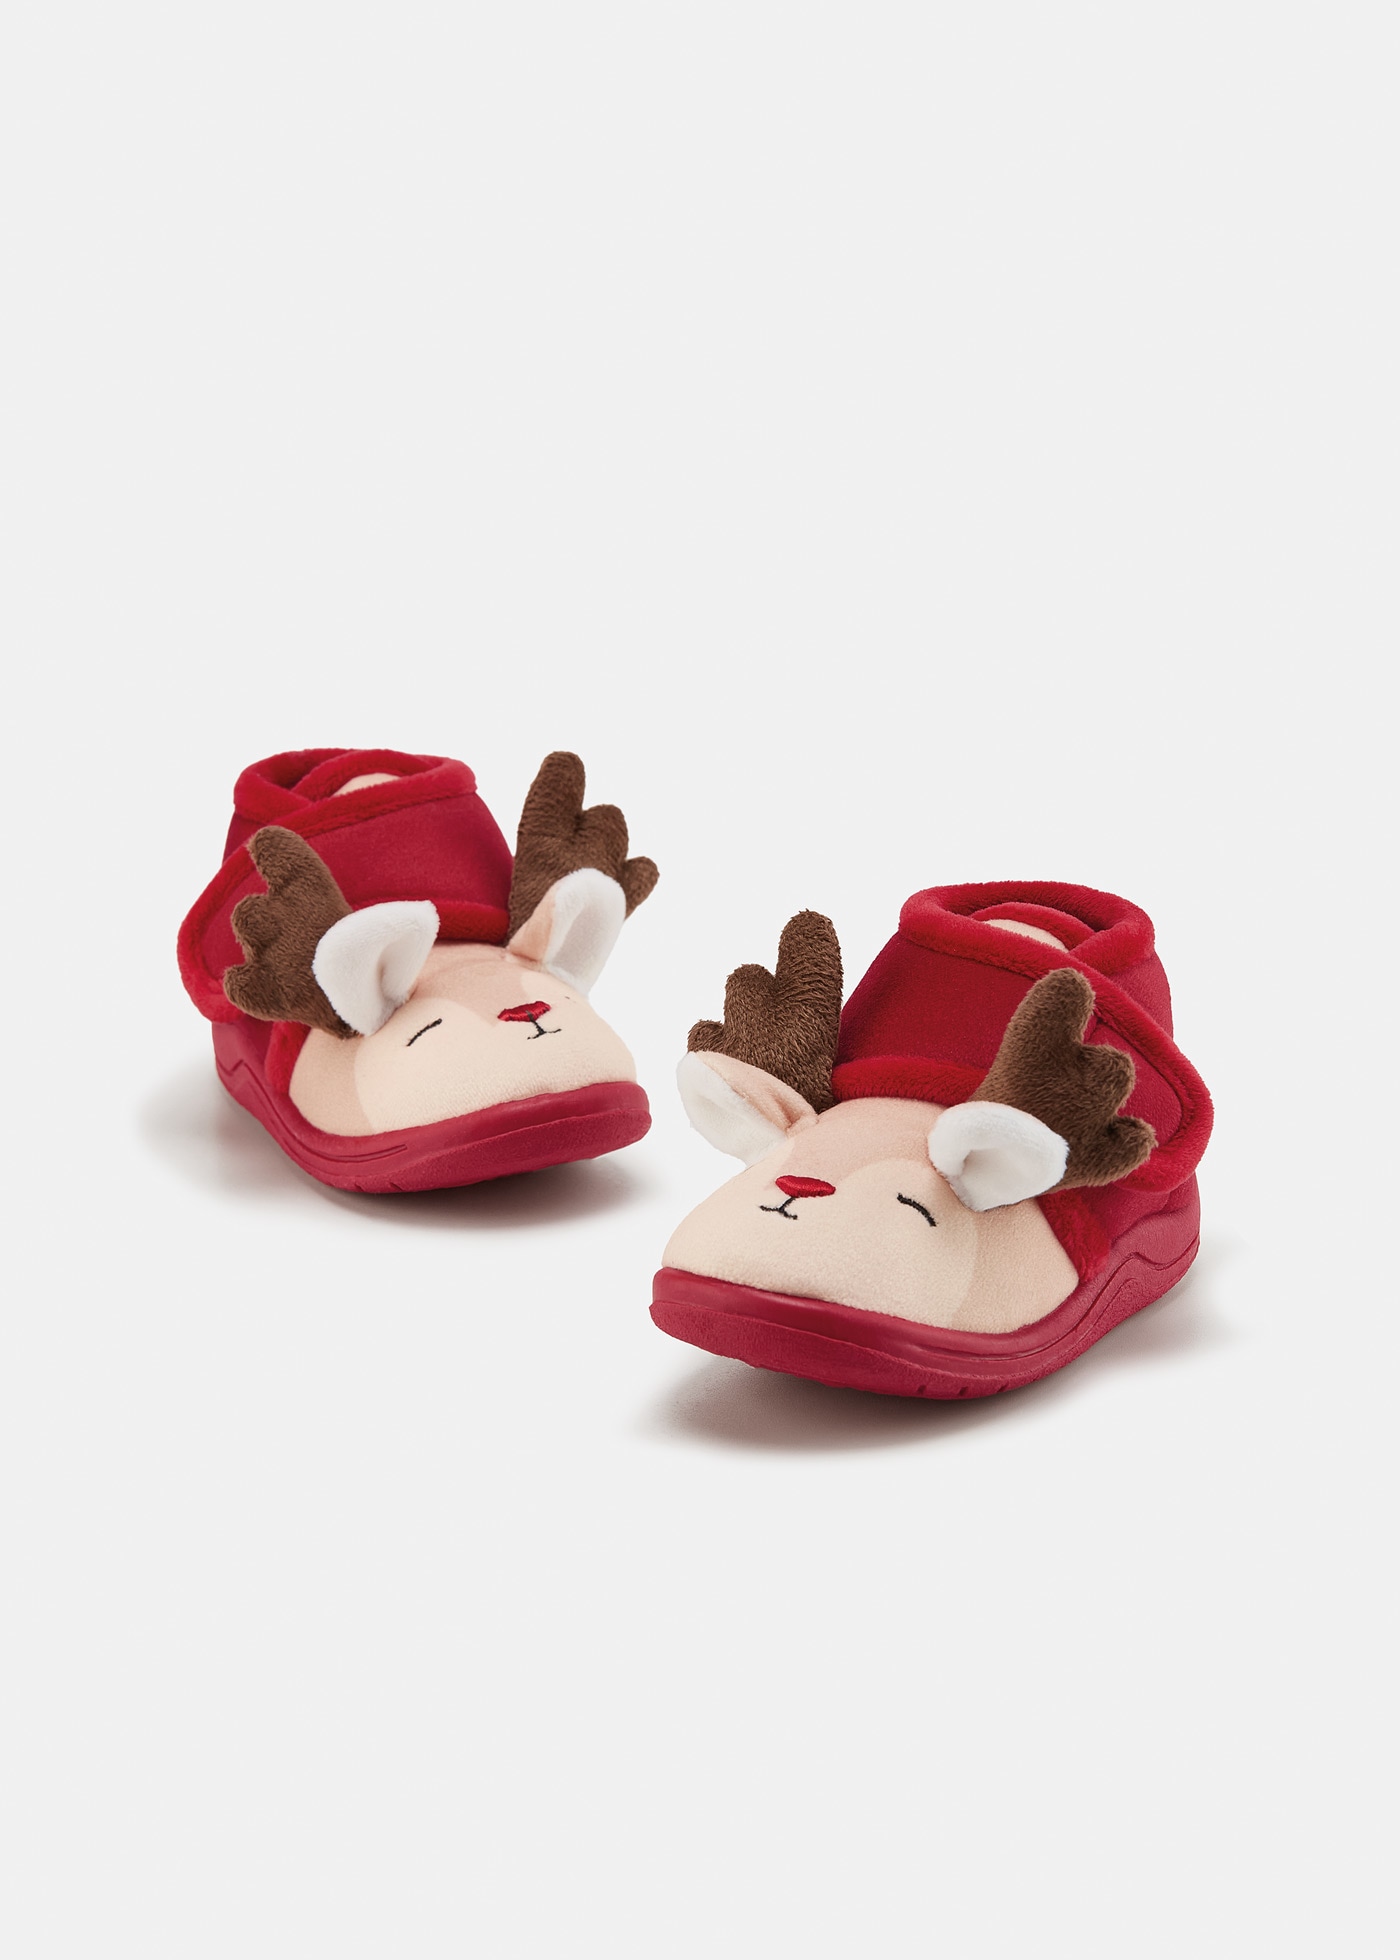 Baby animal slippers